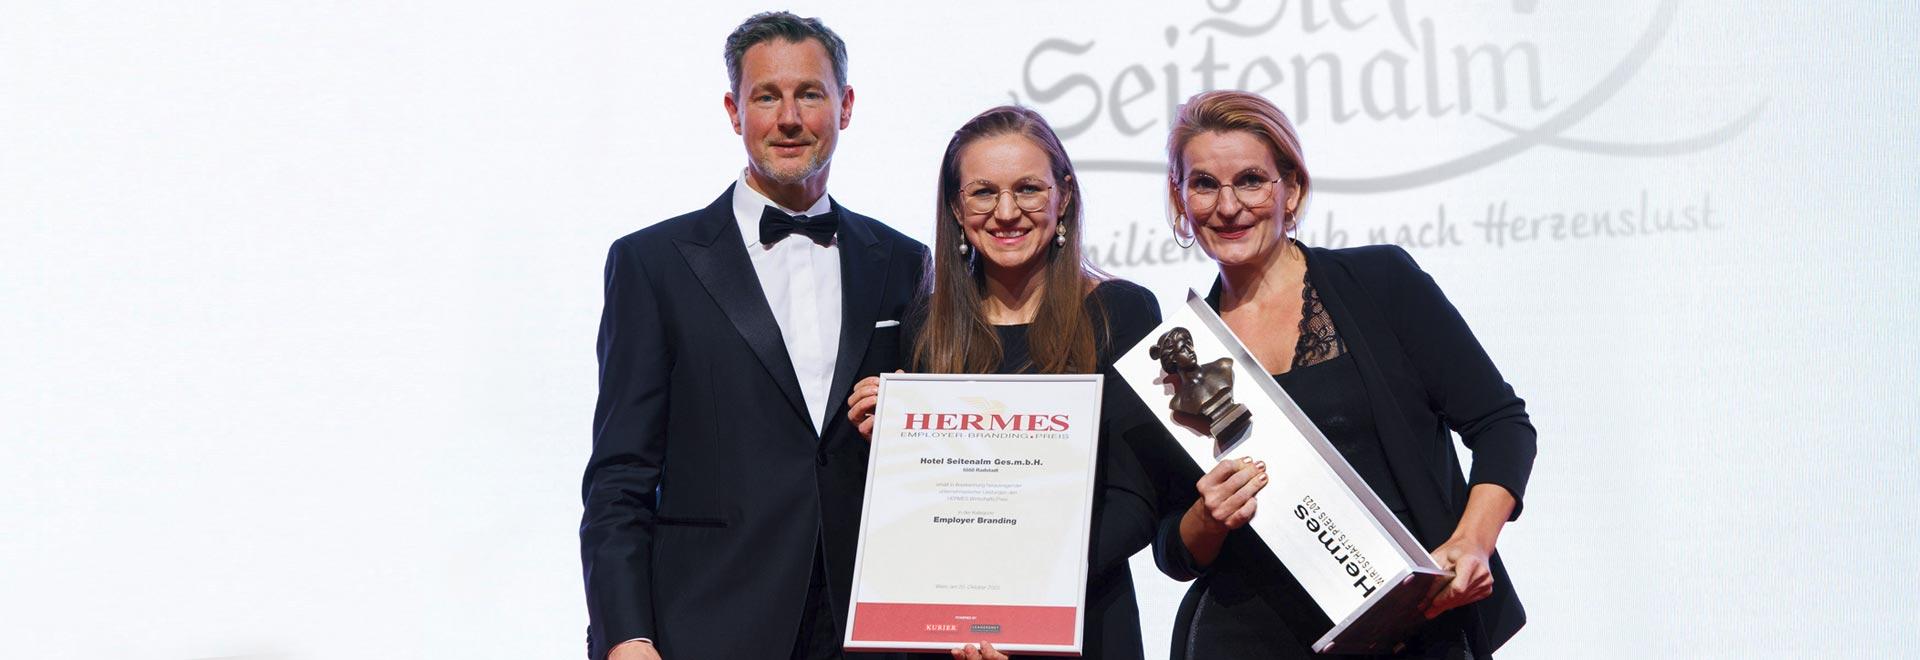 DEBA Employer Branding Magazin – HERMES Award 2023 Seitenalm